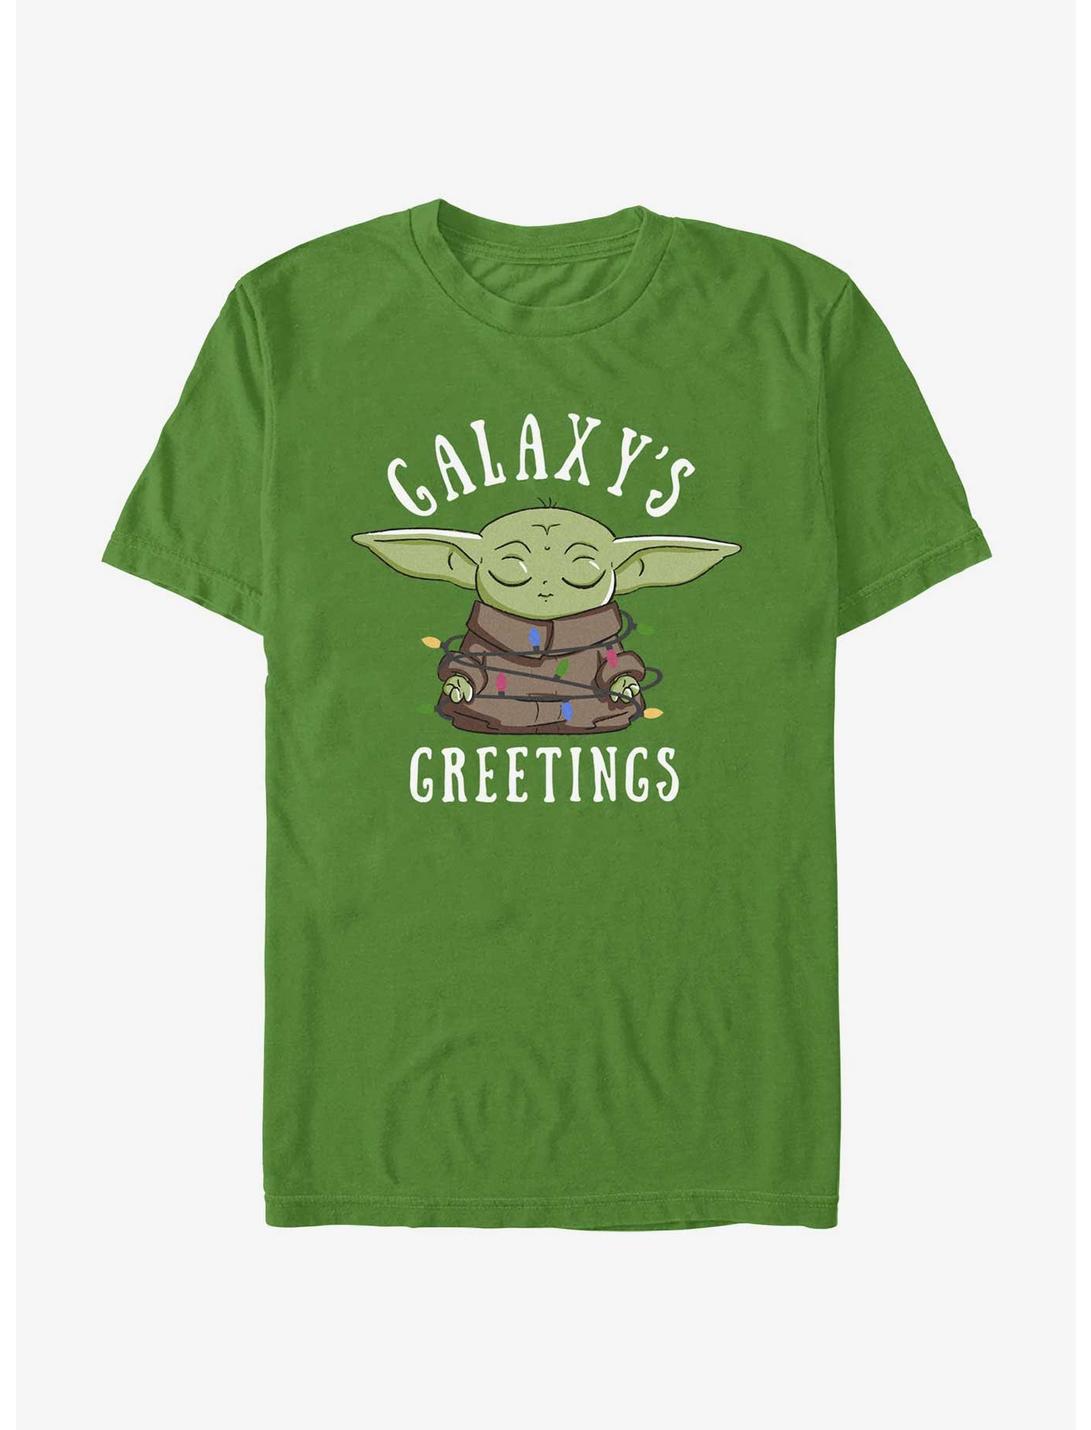 Star Wars The Mandalorian Galaxy's Greetings T-Shirt, KELLY, hi-res